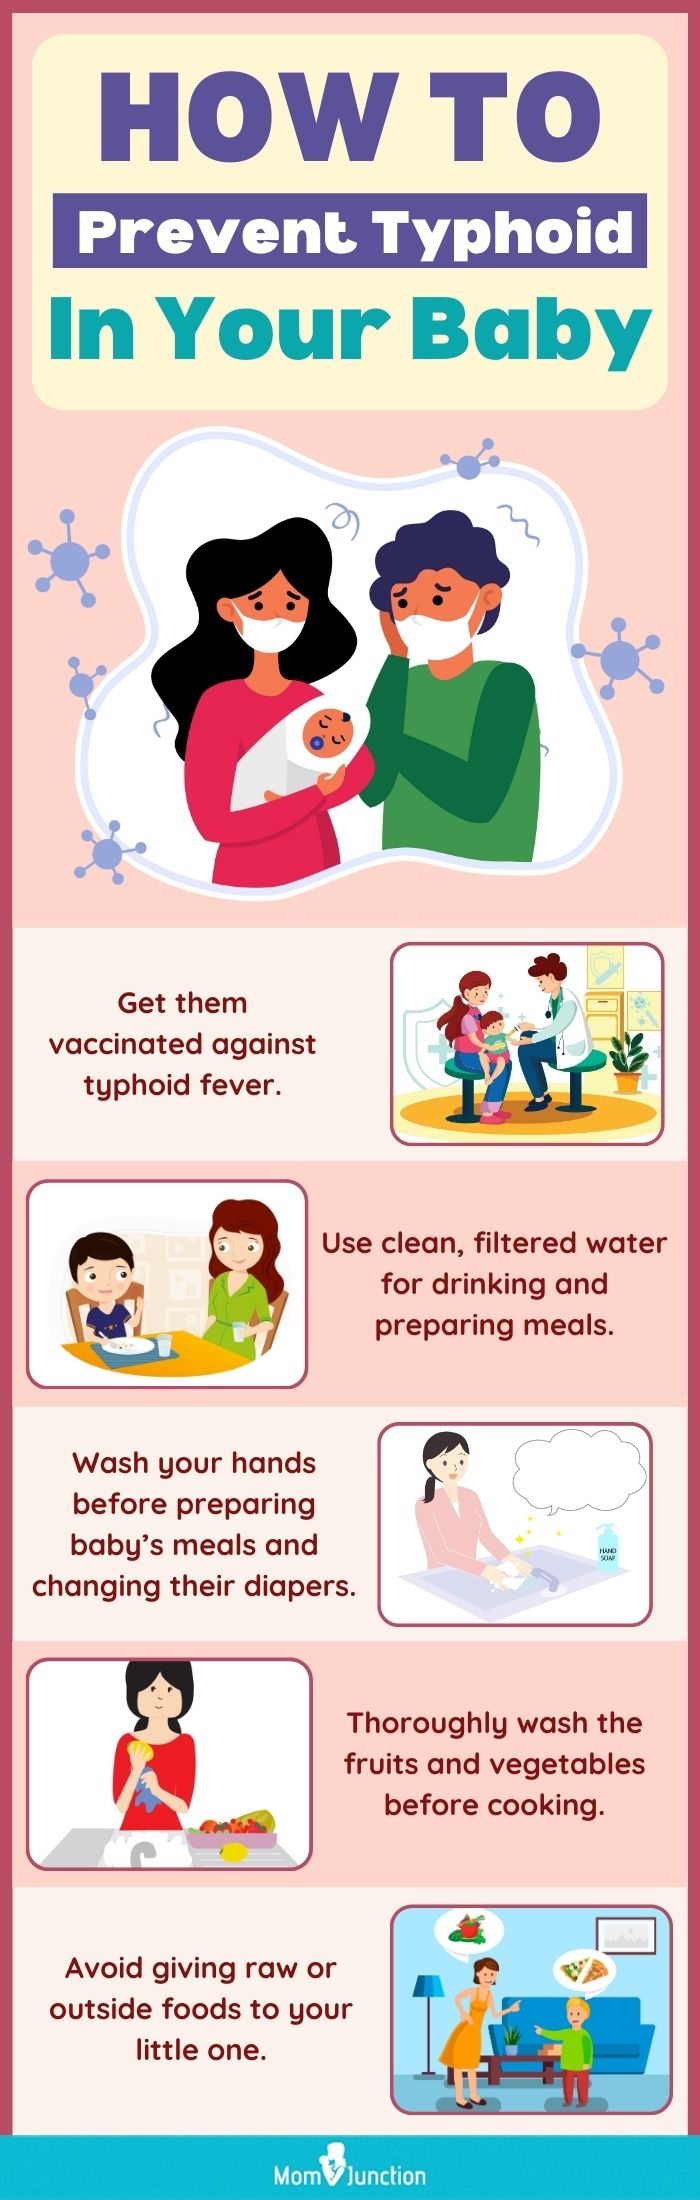 typhoid fever treatment